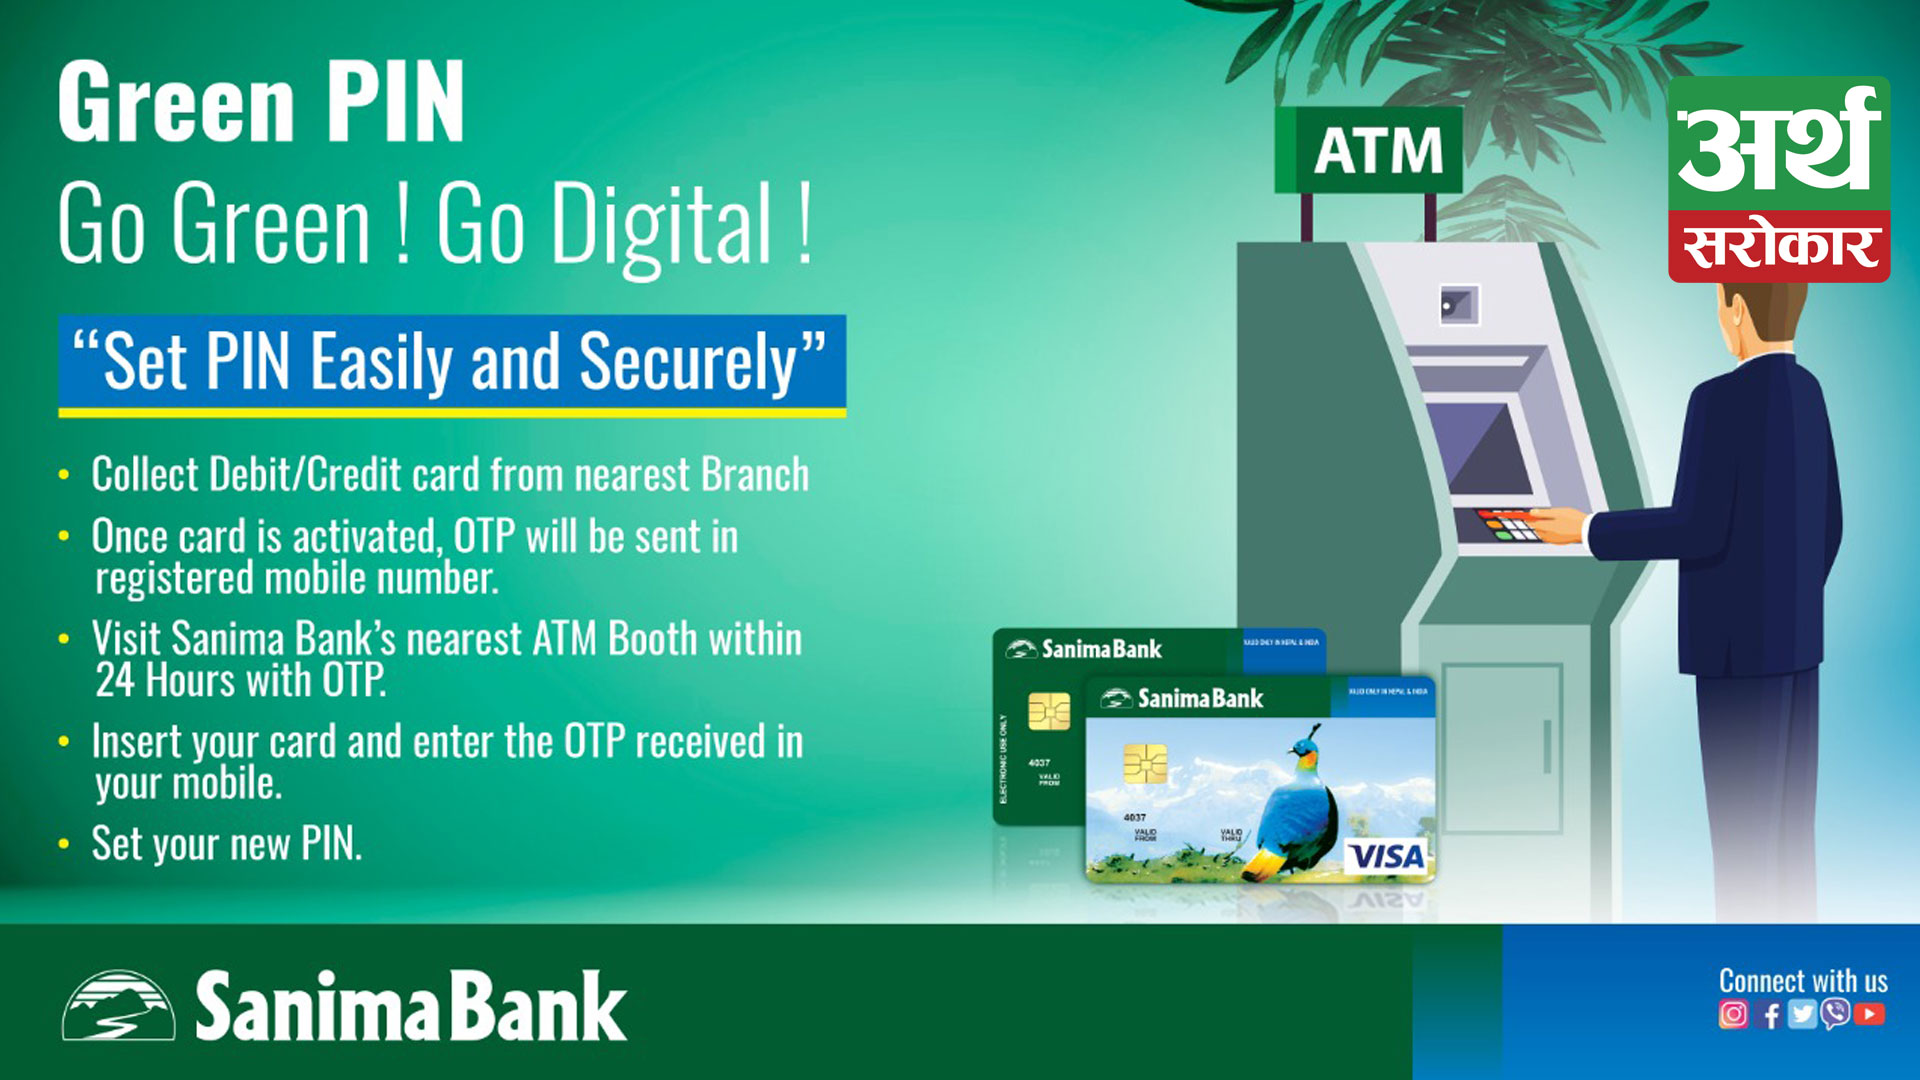 Sanima Bank introduced Green PIN